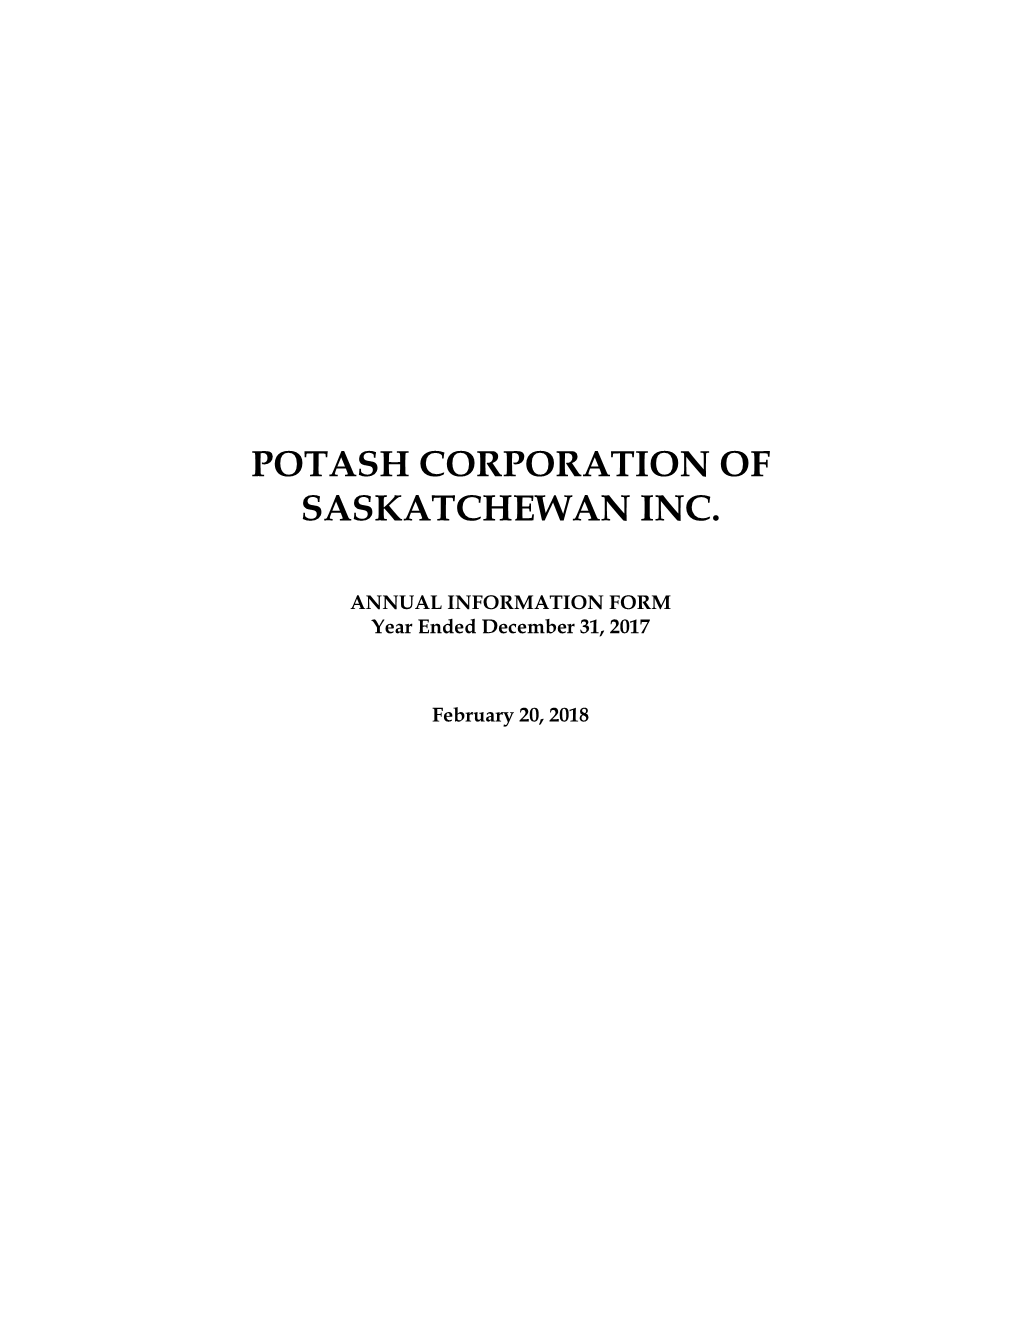 Potash Corporation of Saskatchewan Inc